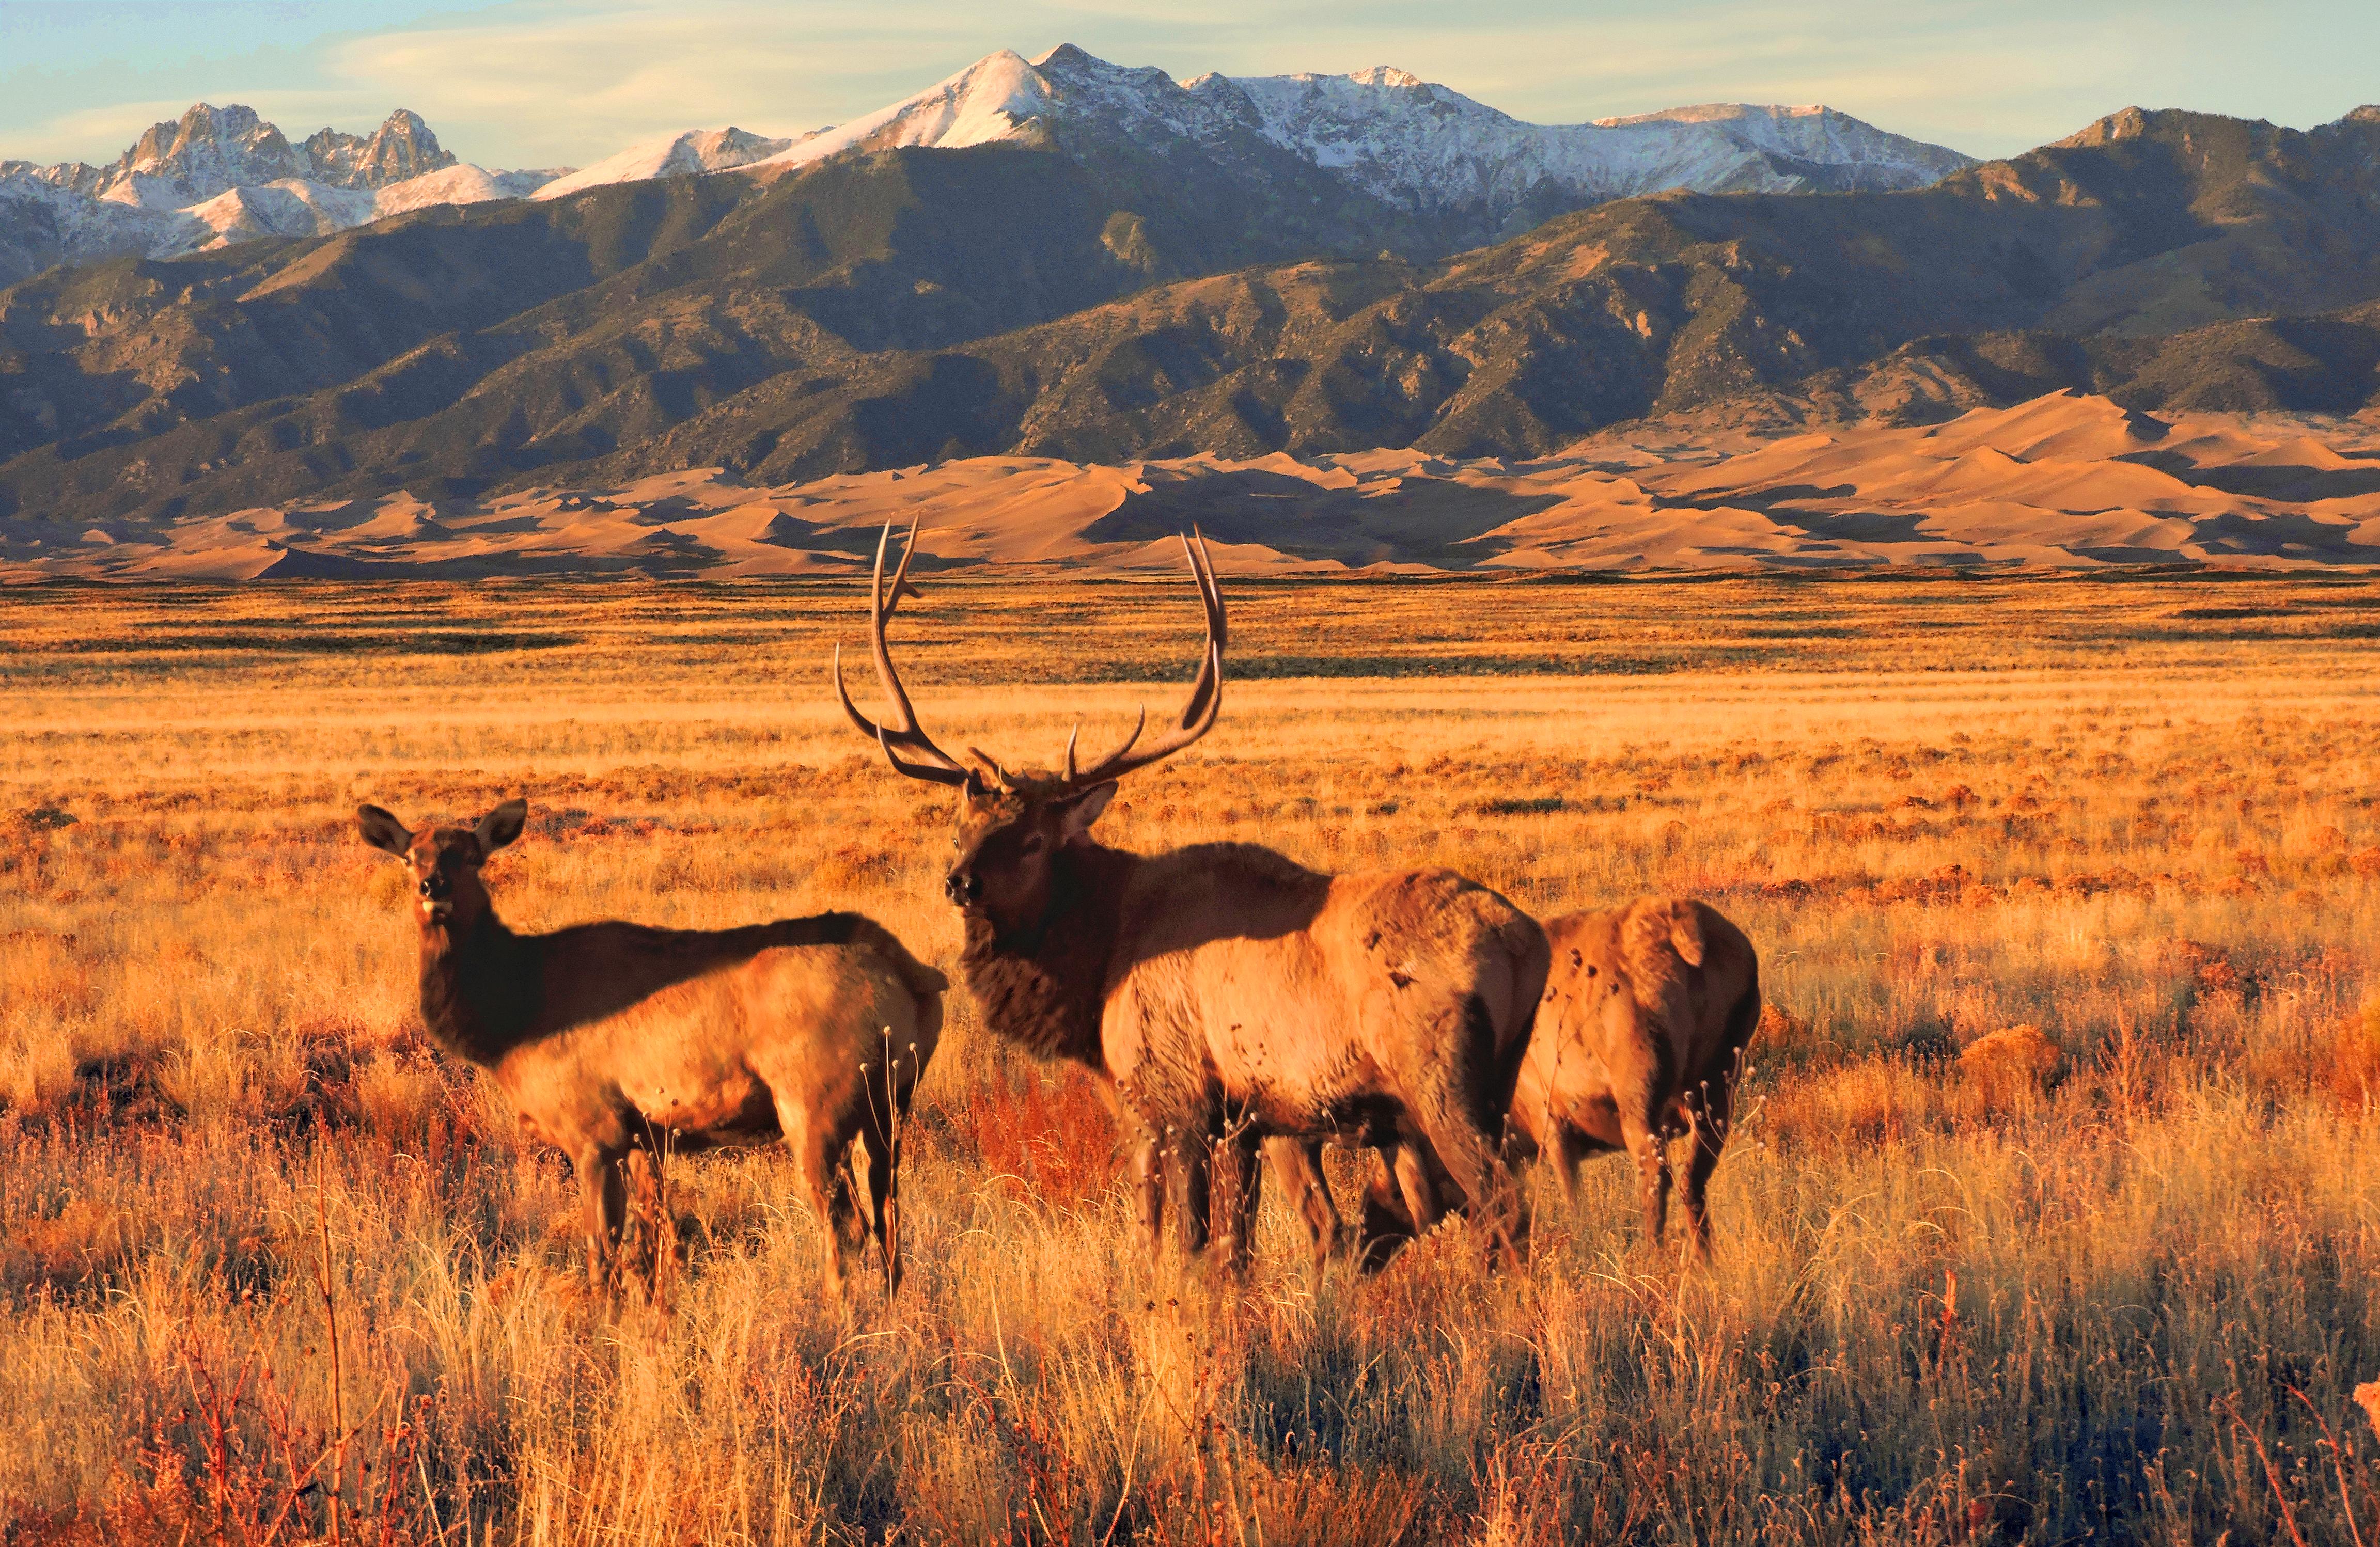 Three Elk in Grasslands, Dunes and Sangre de Cristo Mountains in Background